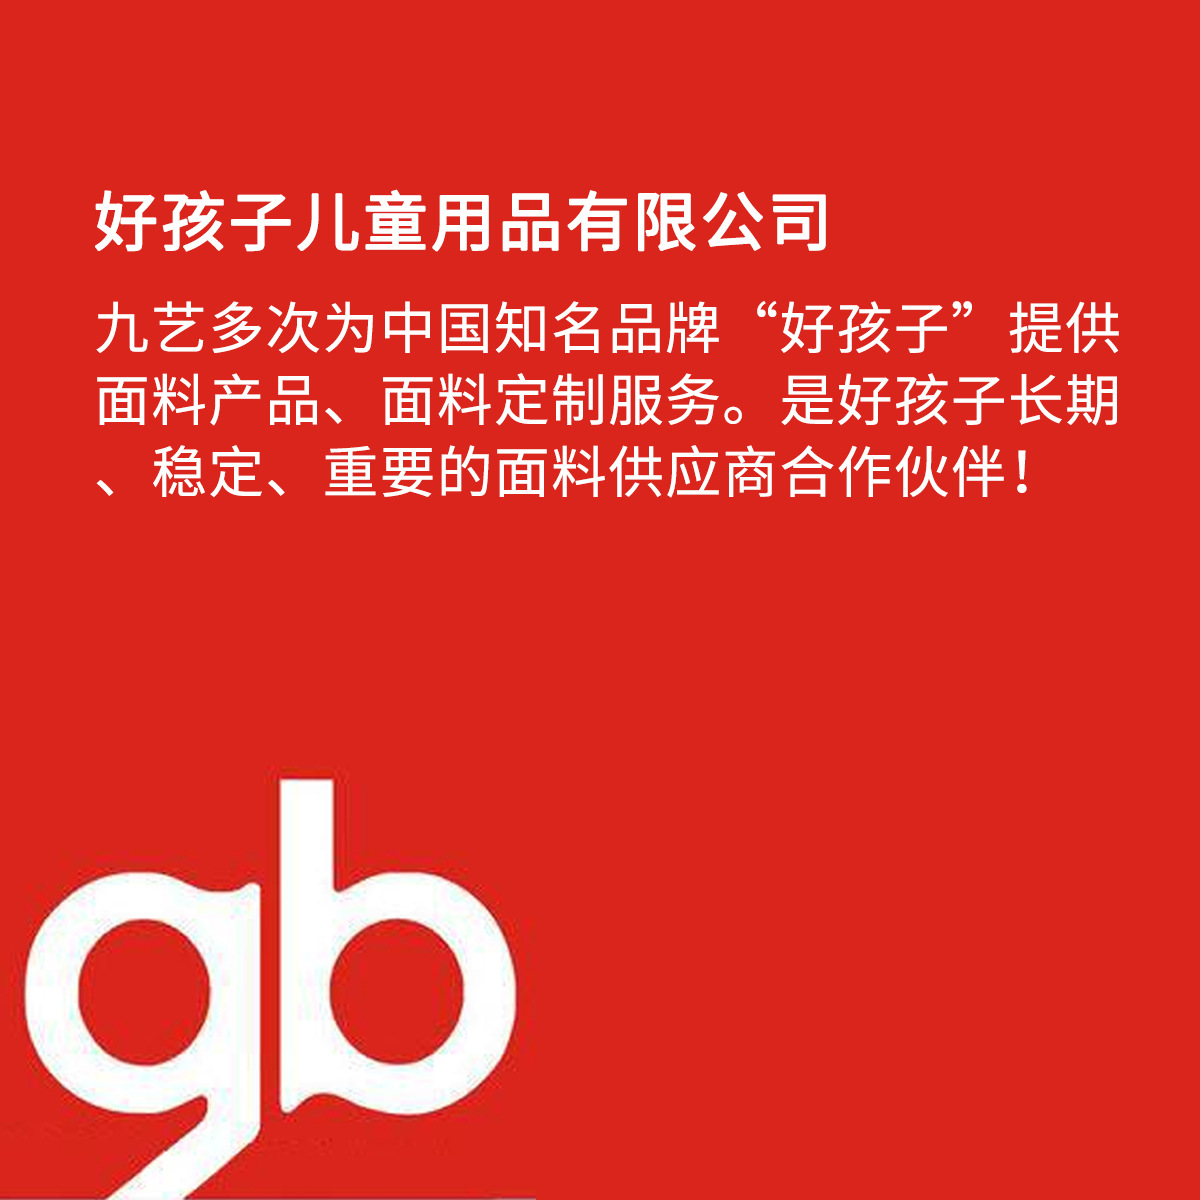 gb好孩子logo图片图片